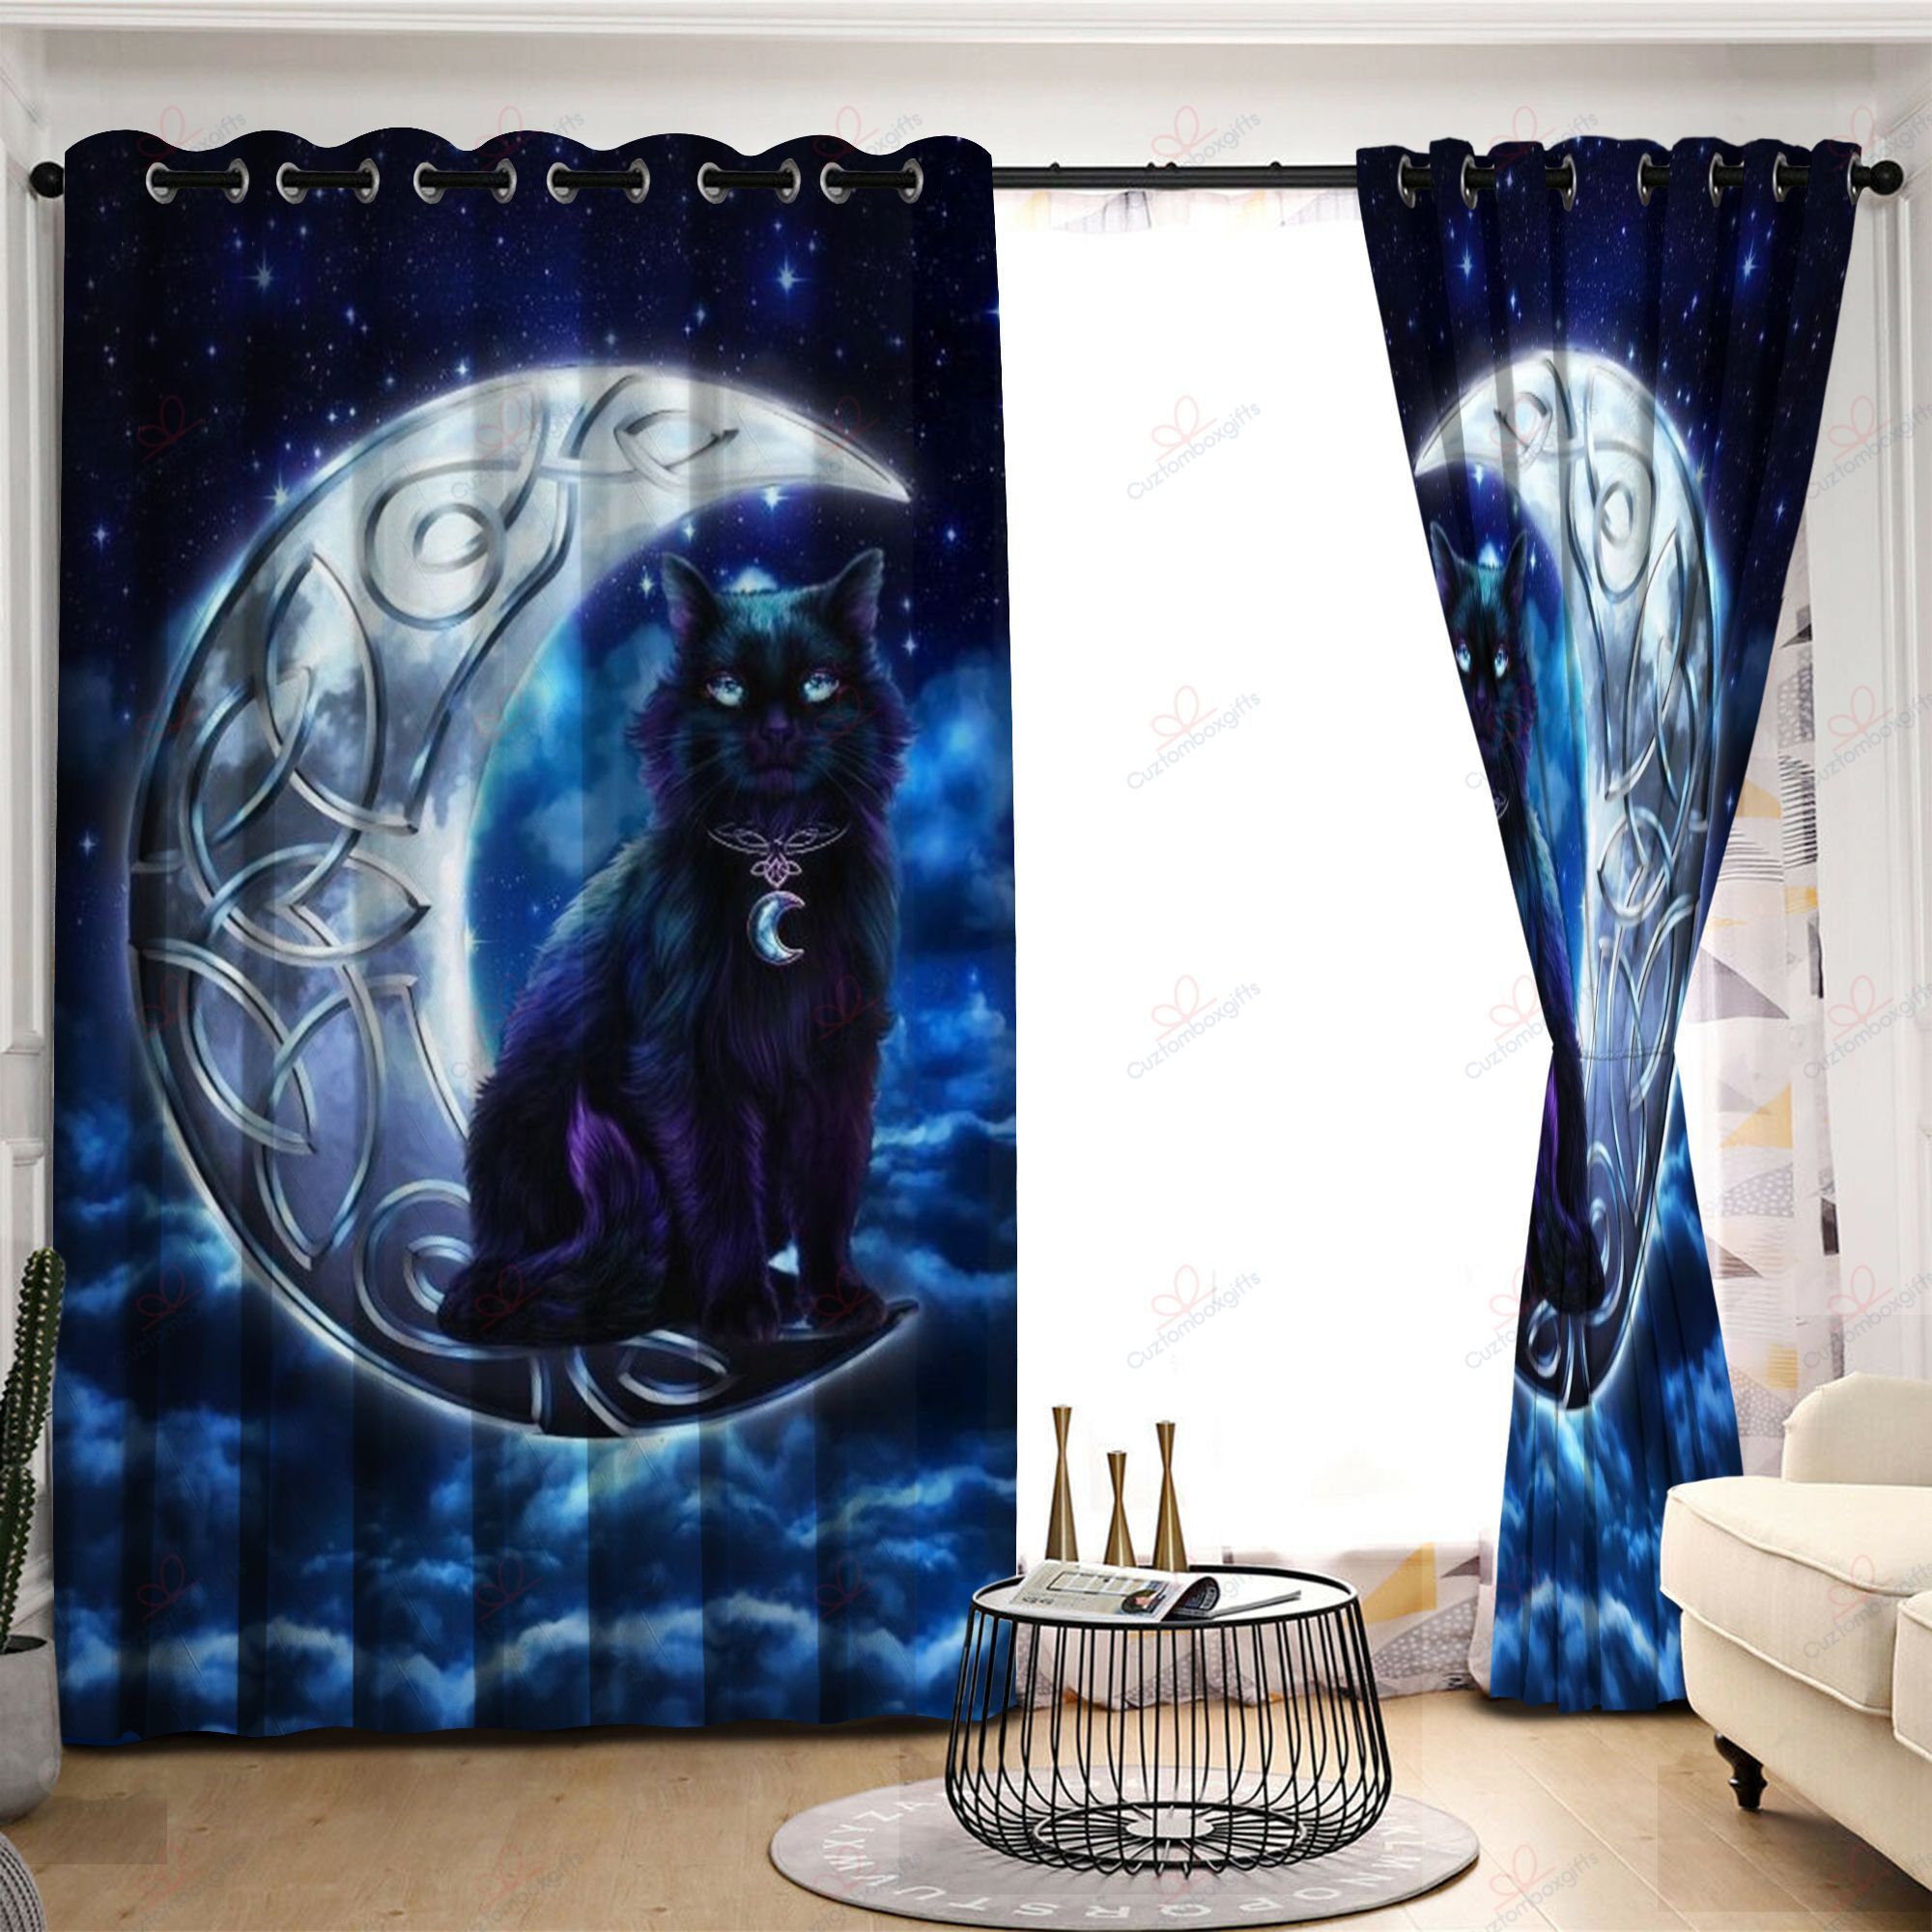 Black Cat Celtic Moon Printed Window Curtain Home Decor